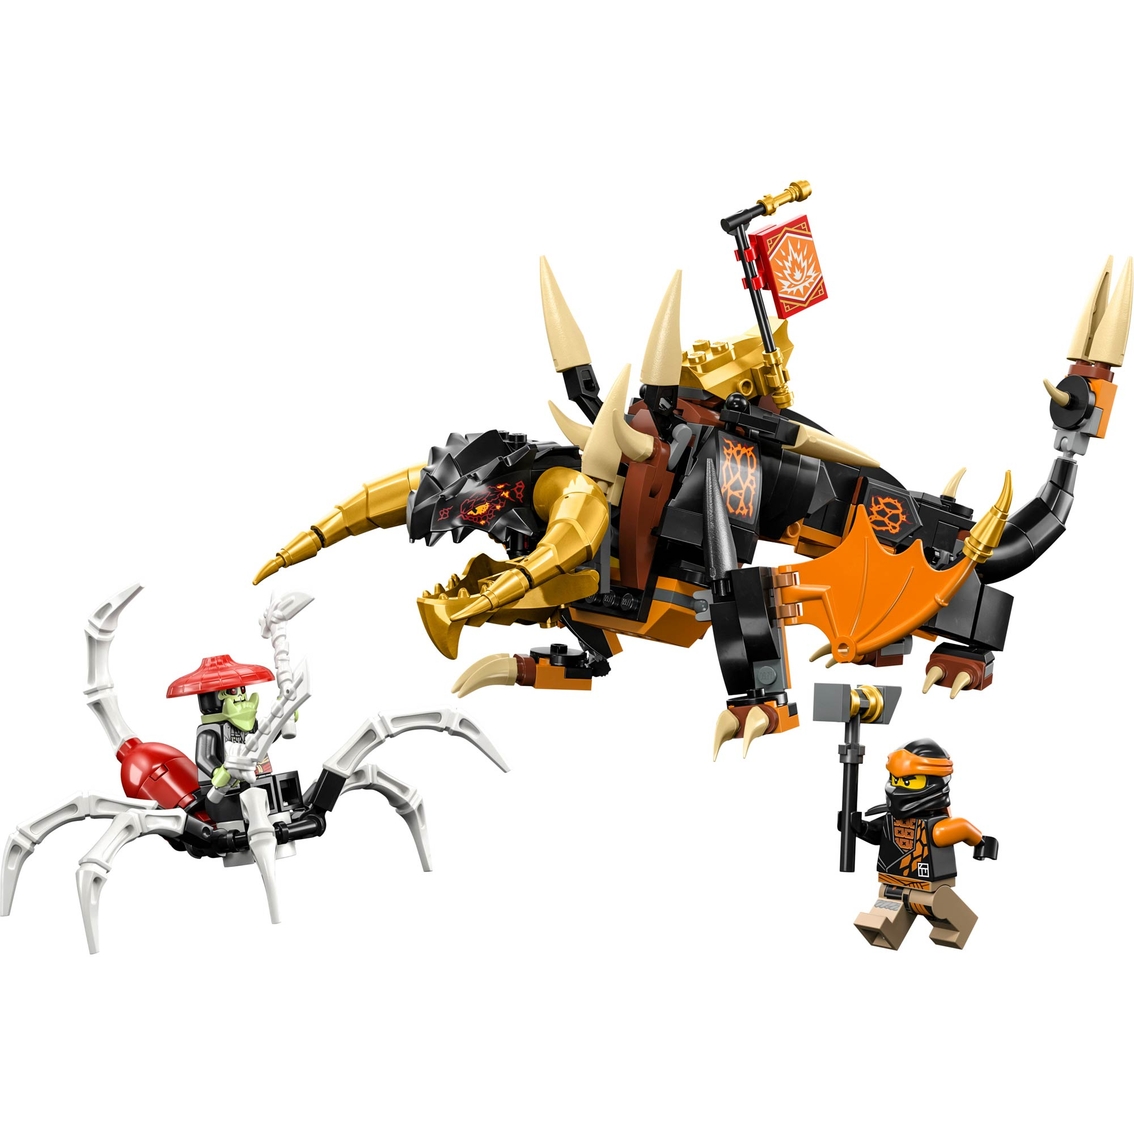 LEGO Ninjago Cole’s Earth Dragon EVO - Image 2 of 2